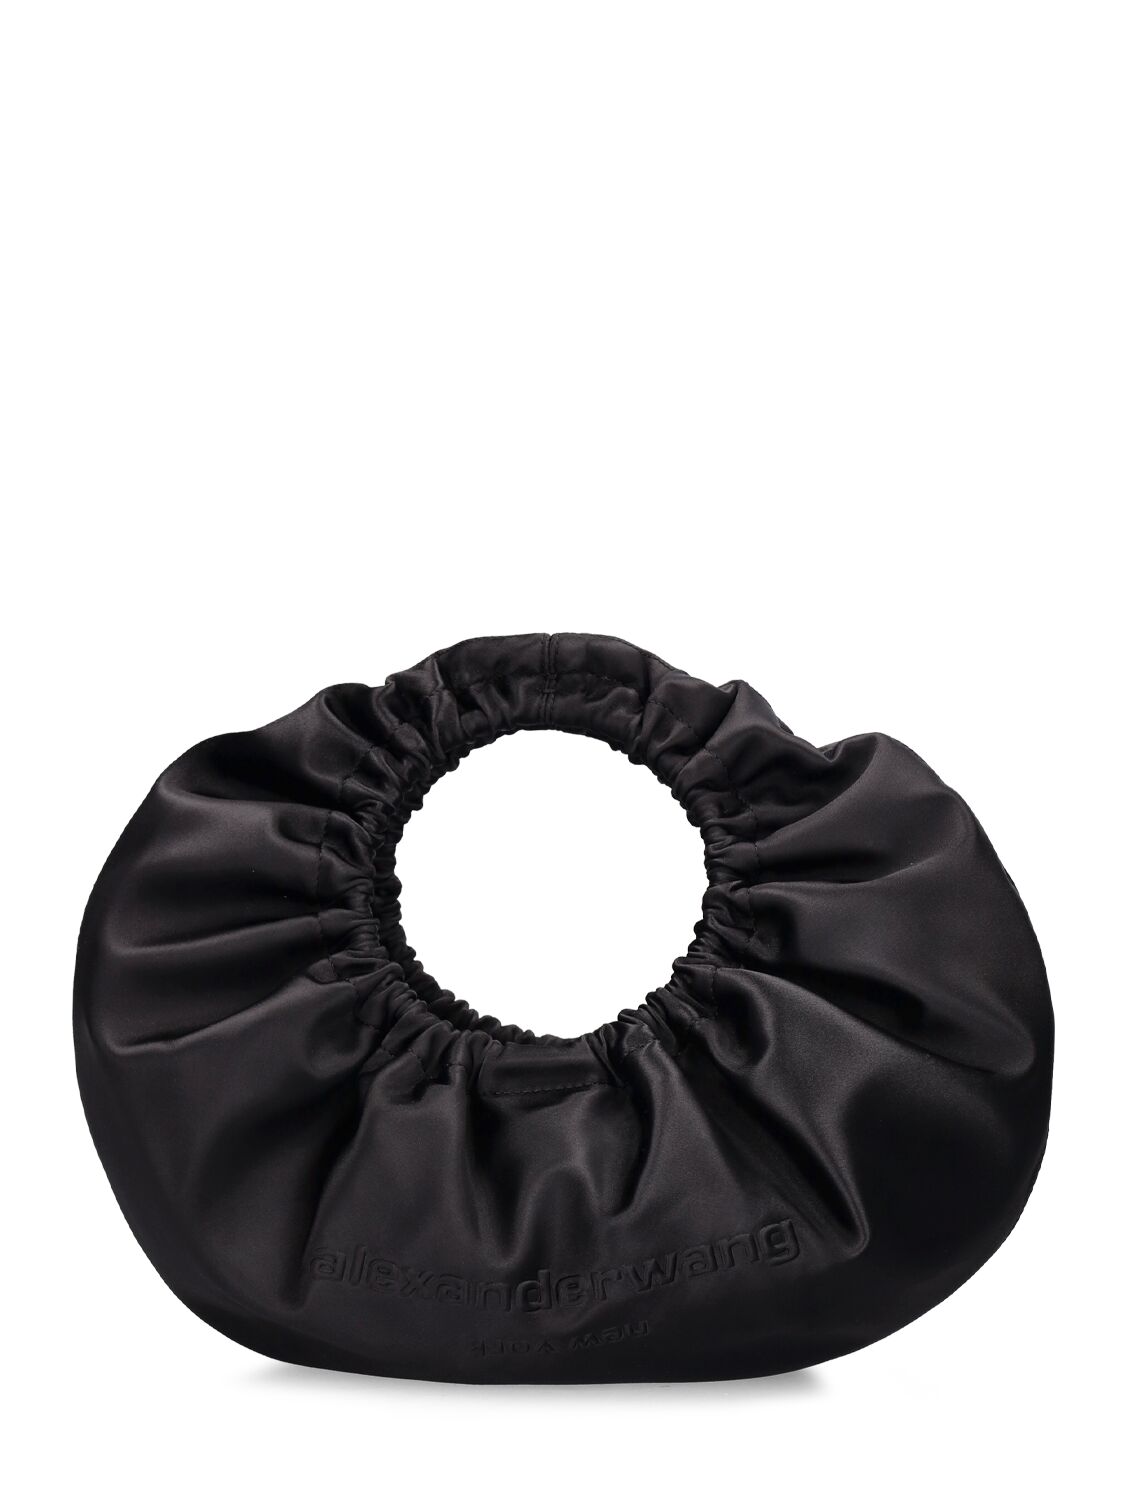 Alexander Wang Small Crescent Top Handle Bag In Black